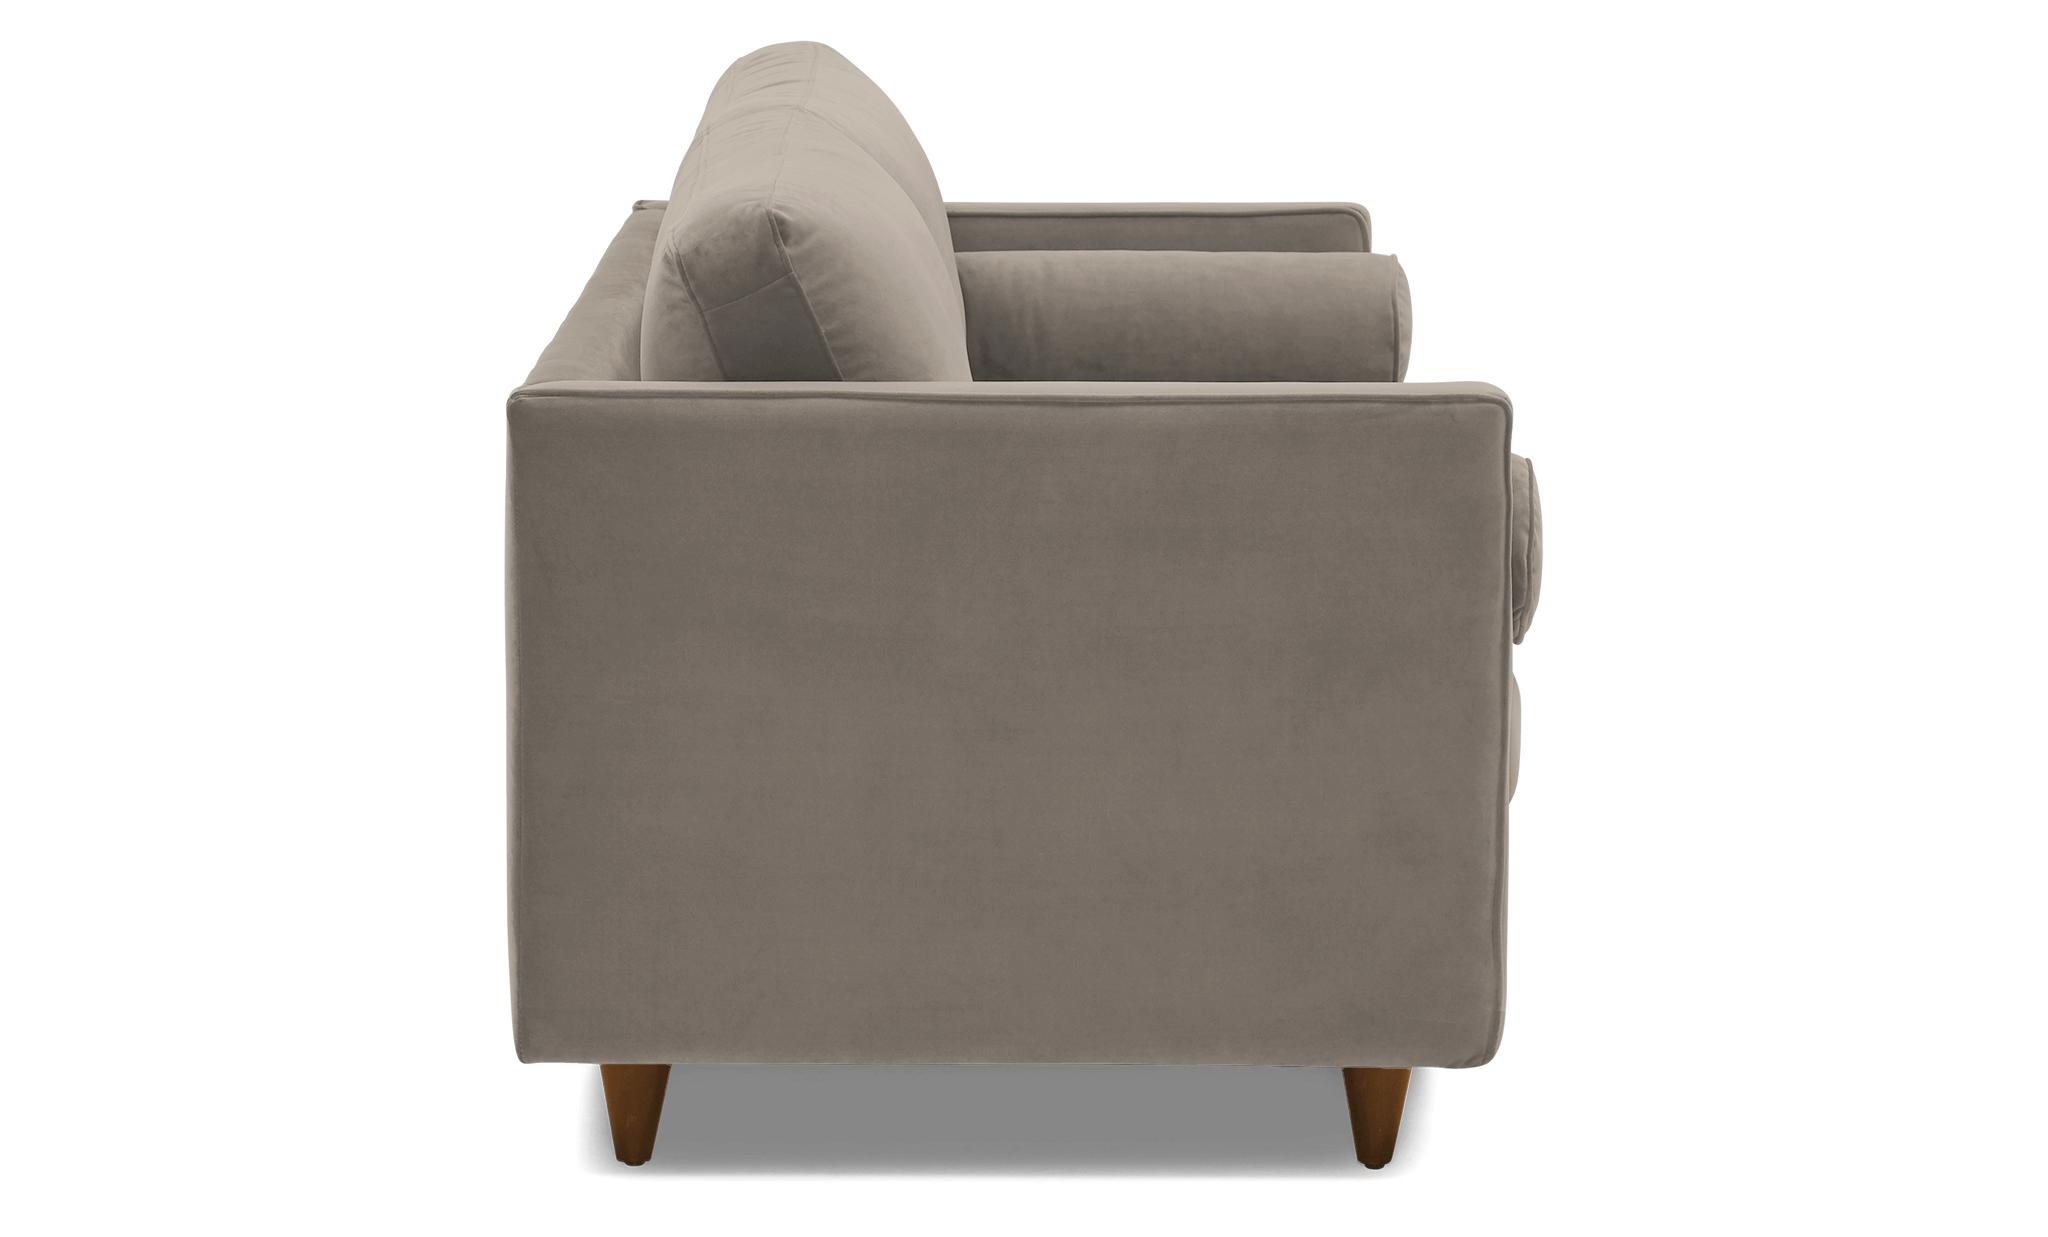 Beige/White Briar Mid Century Modern Sleeper Sofa - Prime Stone - Mocha - Image 2